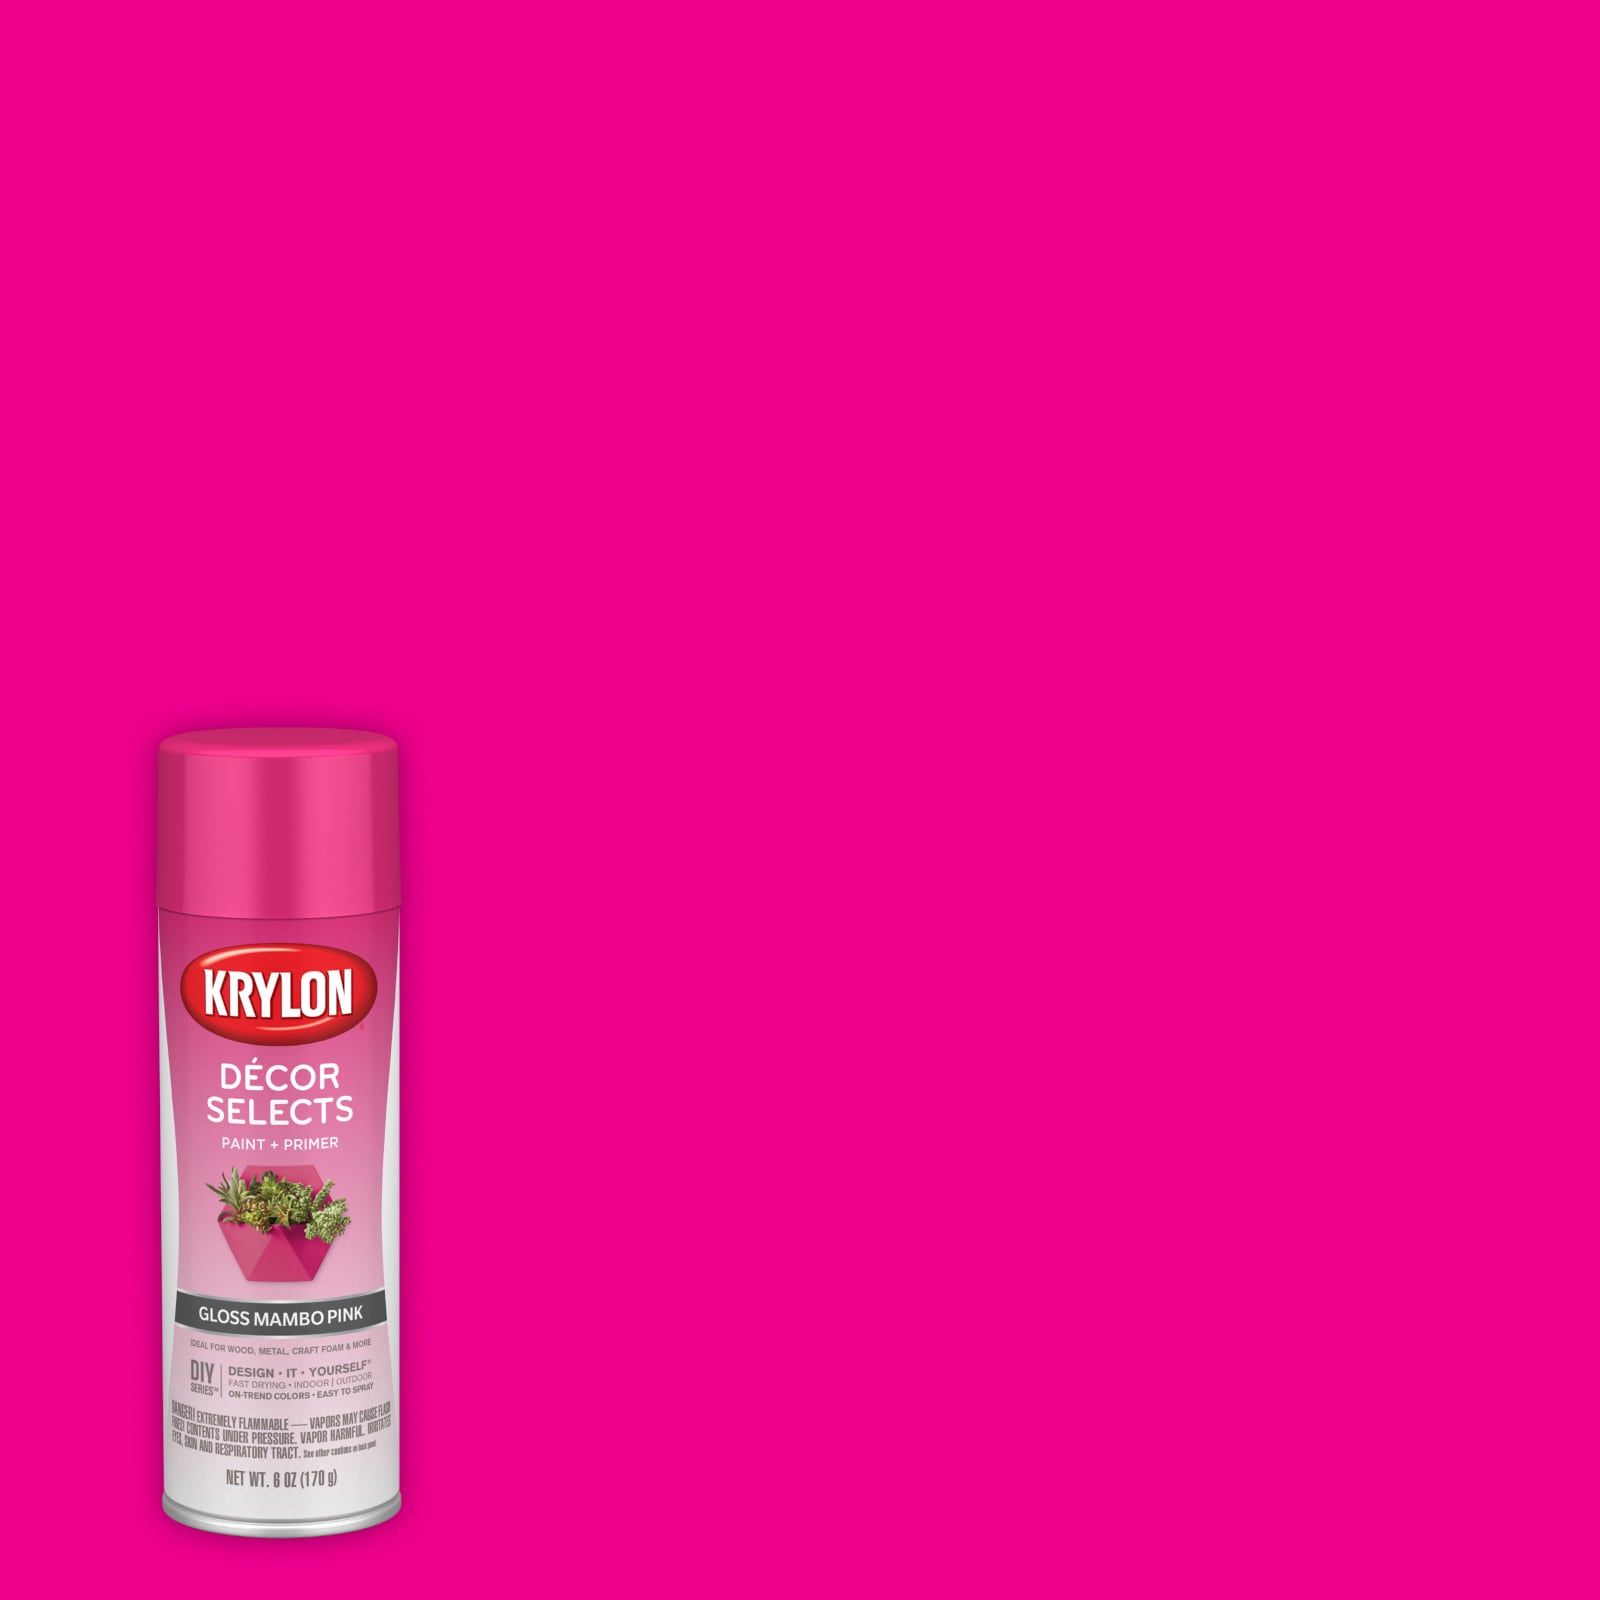 Rust-Oleum Imagine 4-Pack Gloss Pink Glitter Spray Paint (NET WT